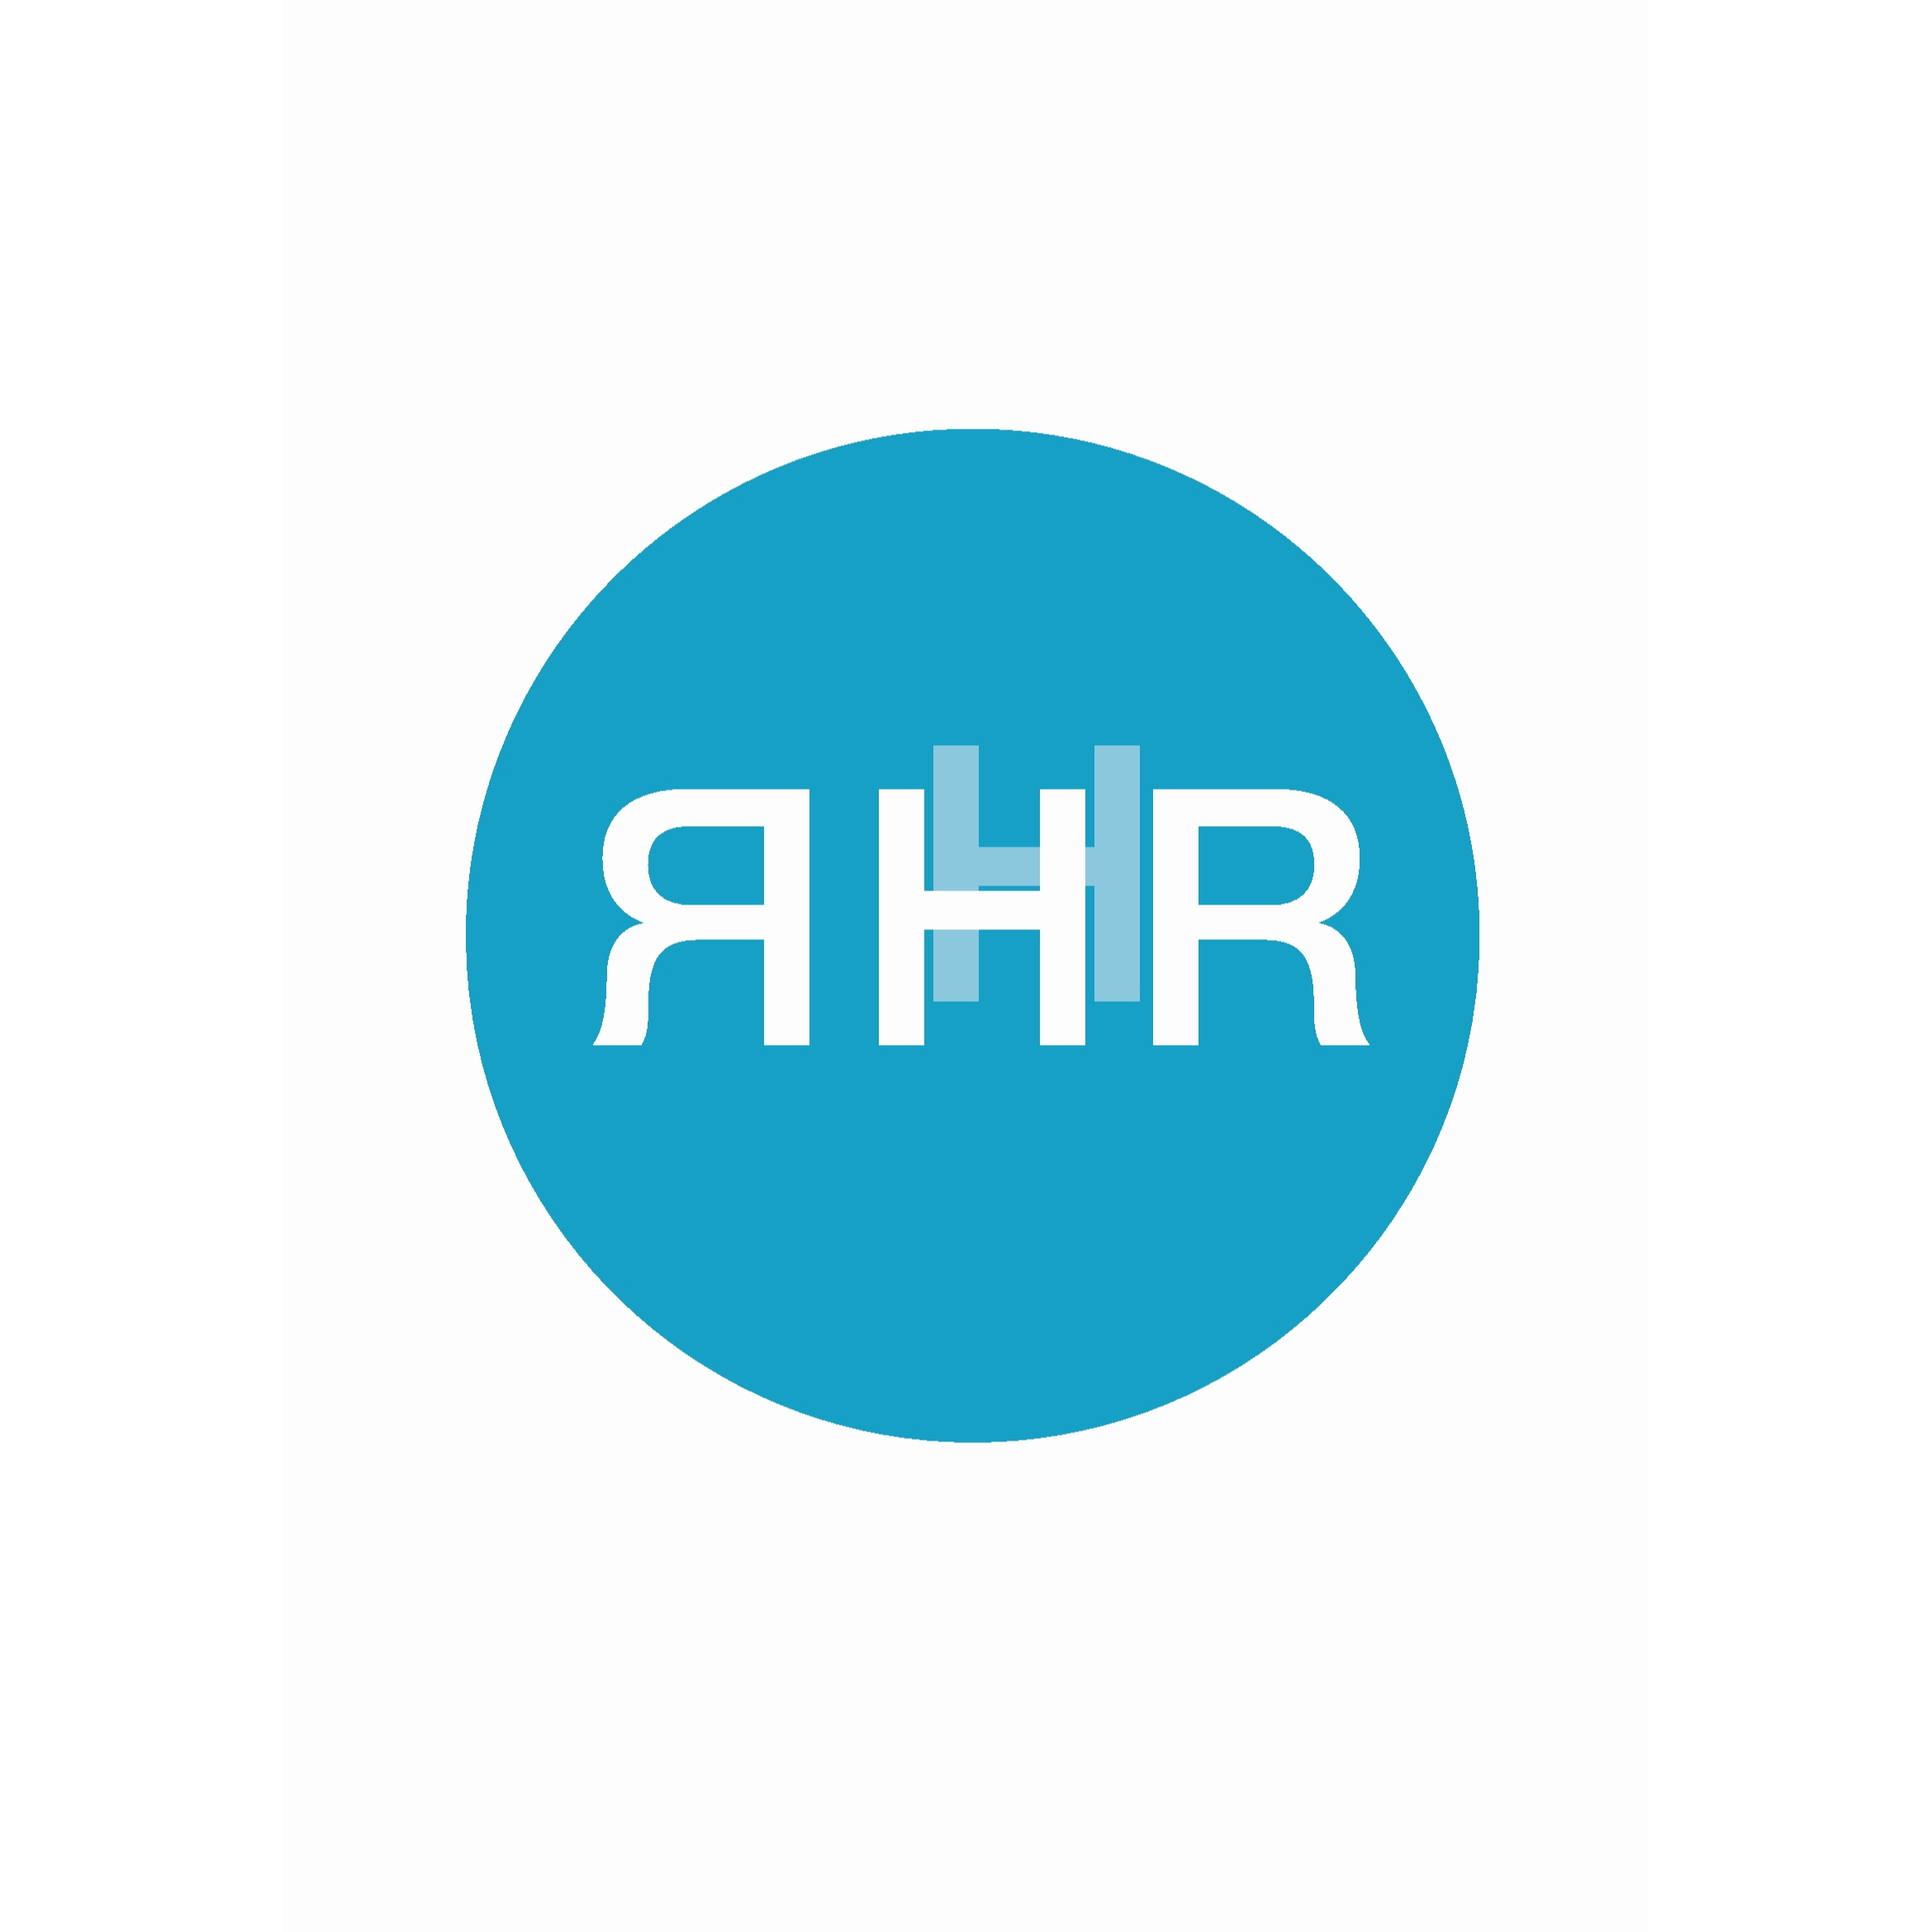 RHR Coaching & Human Resources Consulting Regina Heisterkamp in Ratingen - Logo